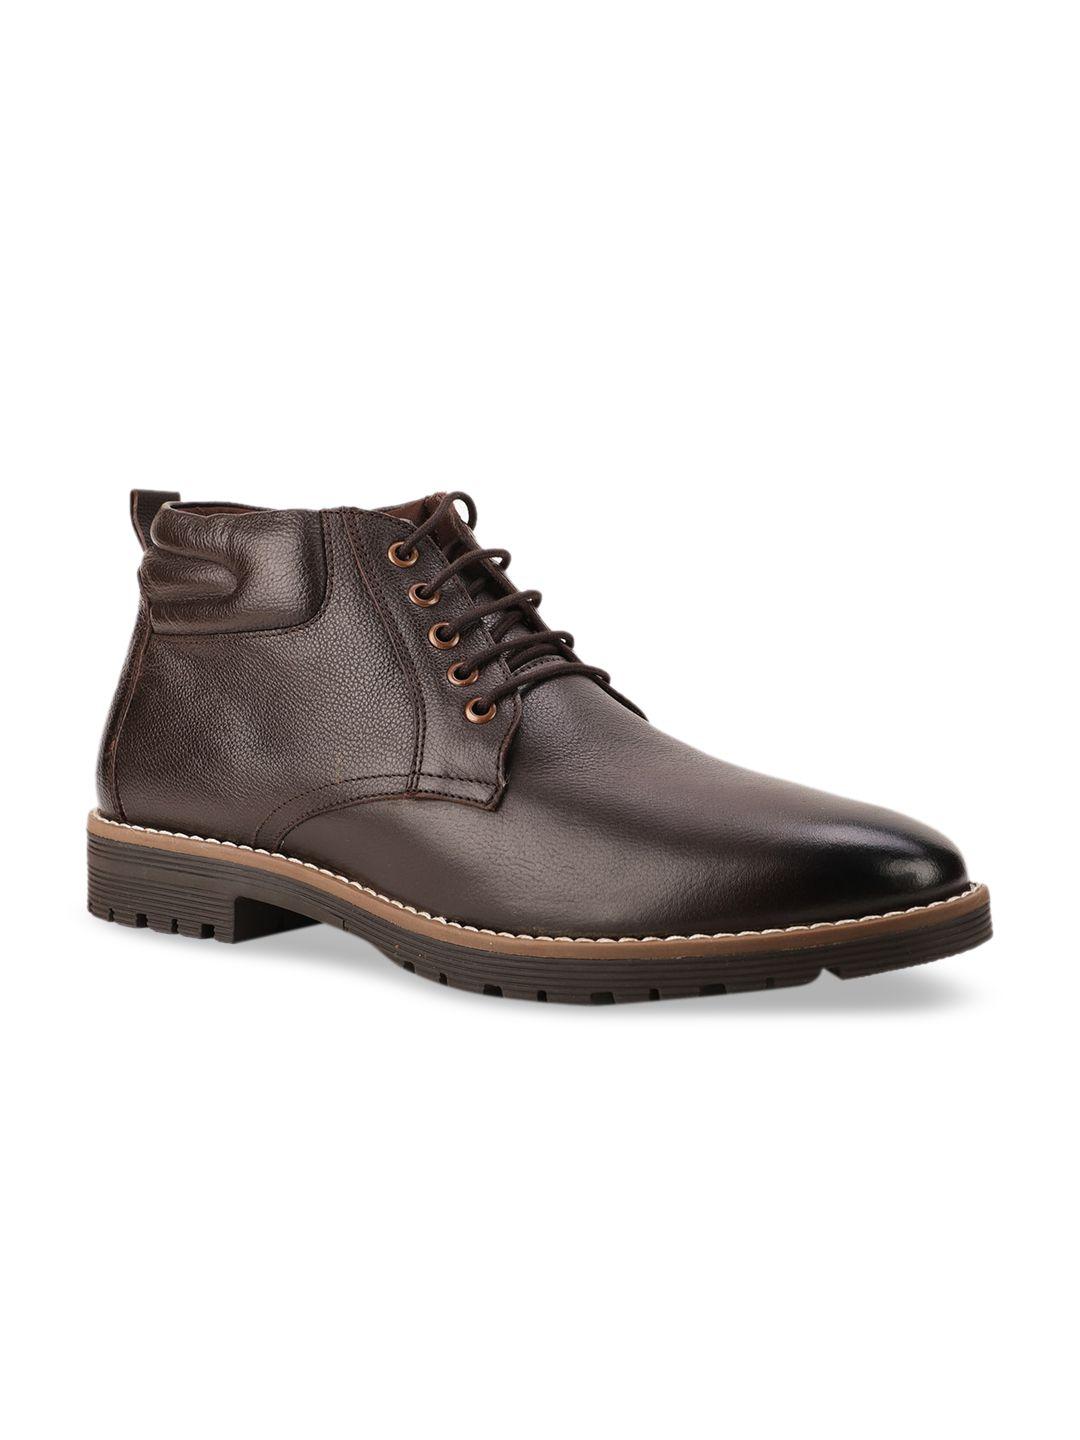 bata men brown leather flat boots